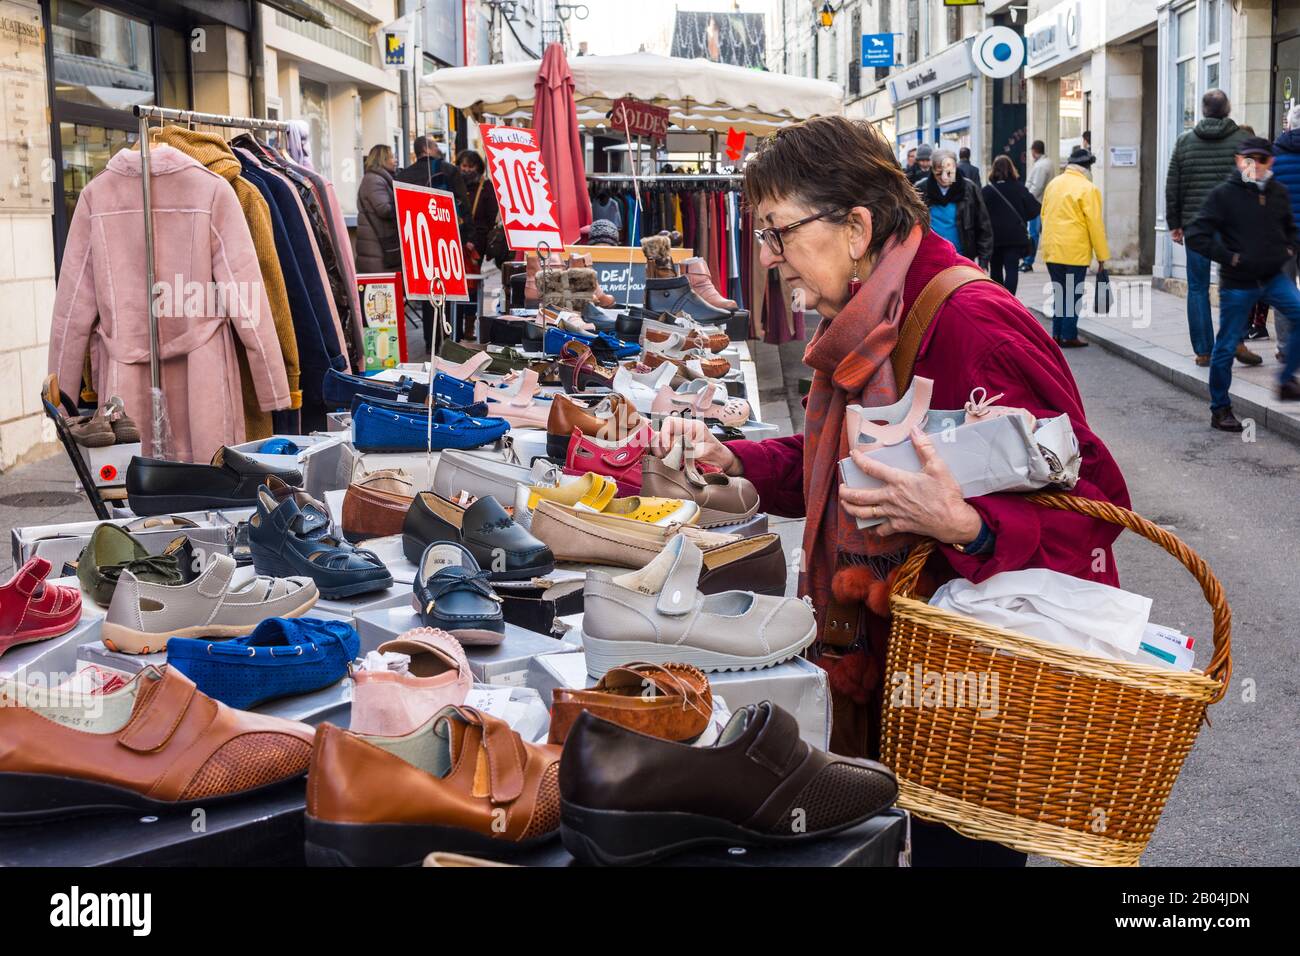 Shopping market stall shoes -Fotos und -Bildmaterial in hoher Auflösung –  Alamy